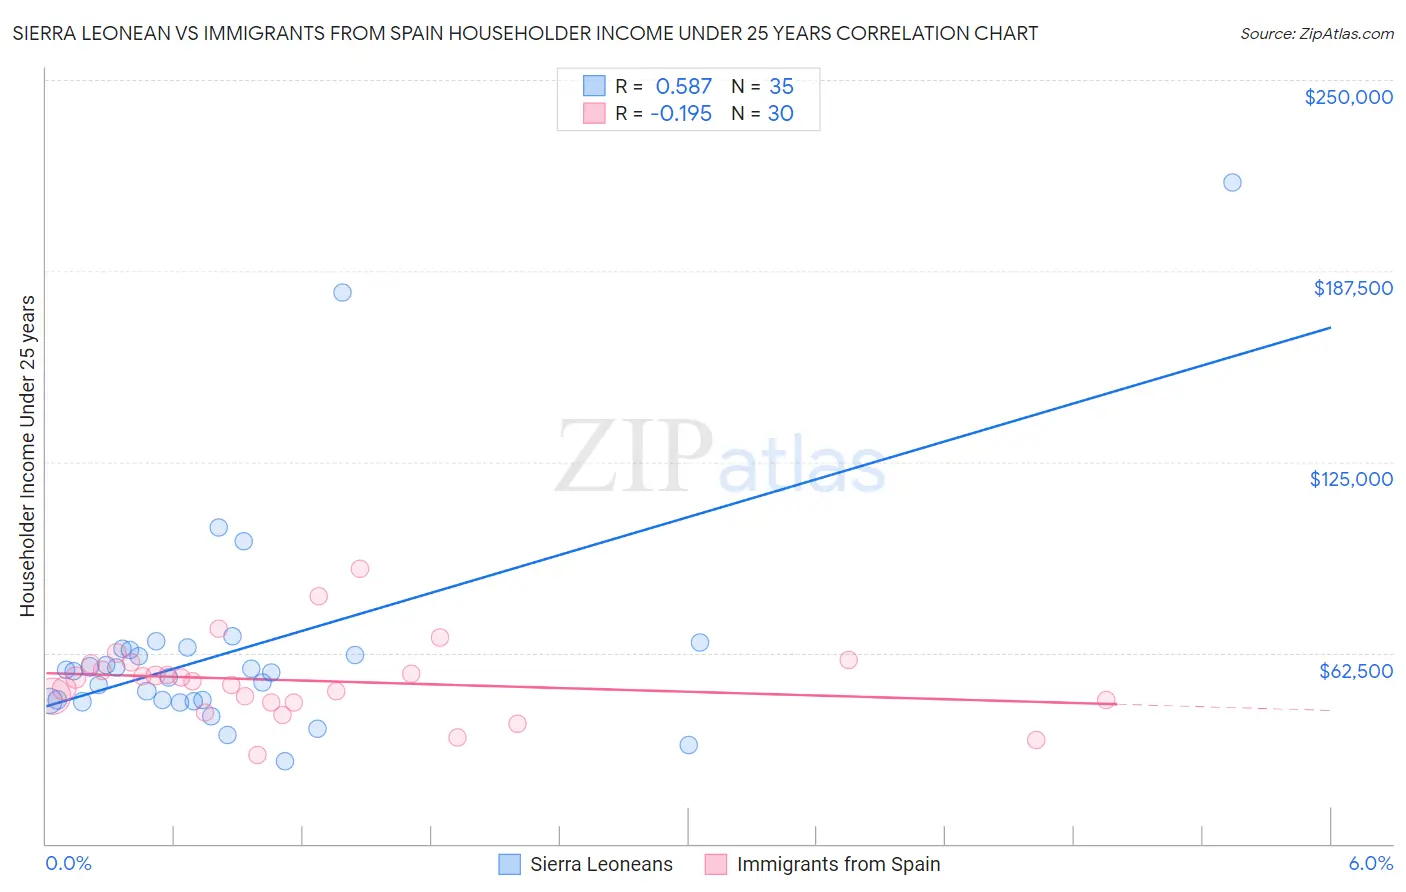 Sierra Leonean vs Immigrants from Spain Householder Income Under 25 years